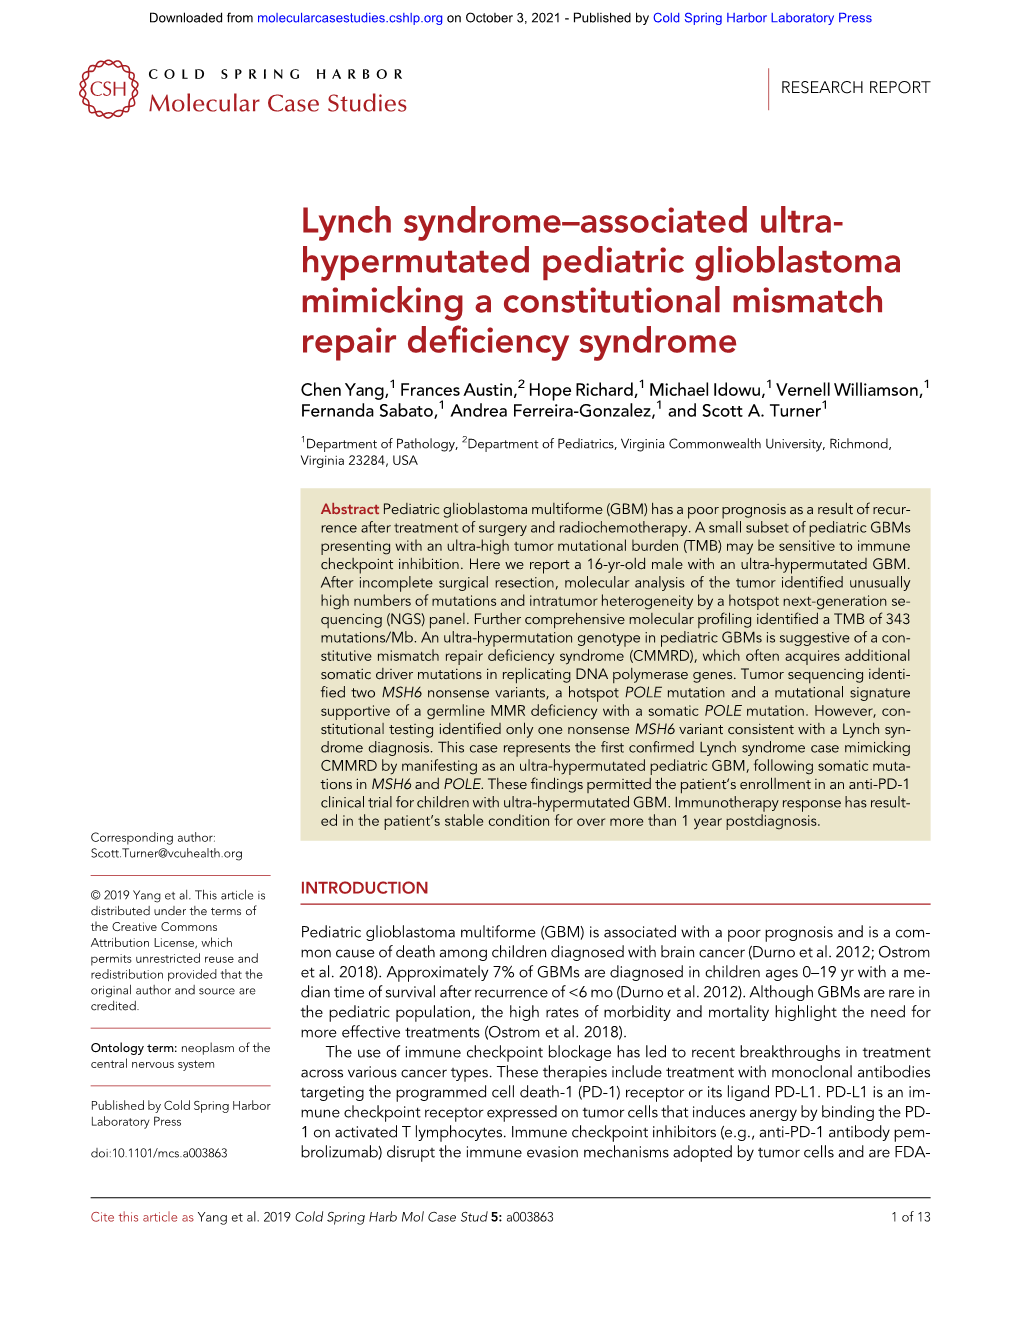 Lynch Syndrome–Associated Ultra-Hypermutated Pediatric